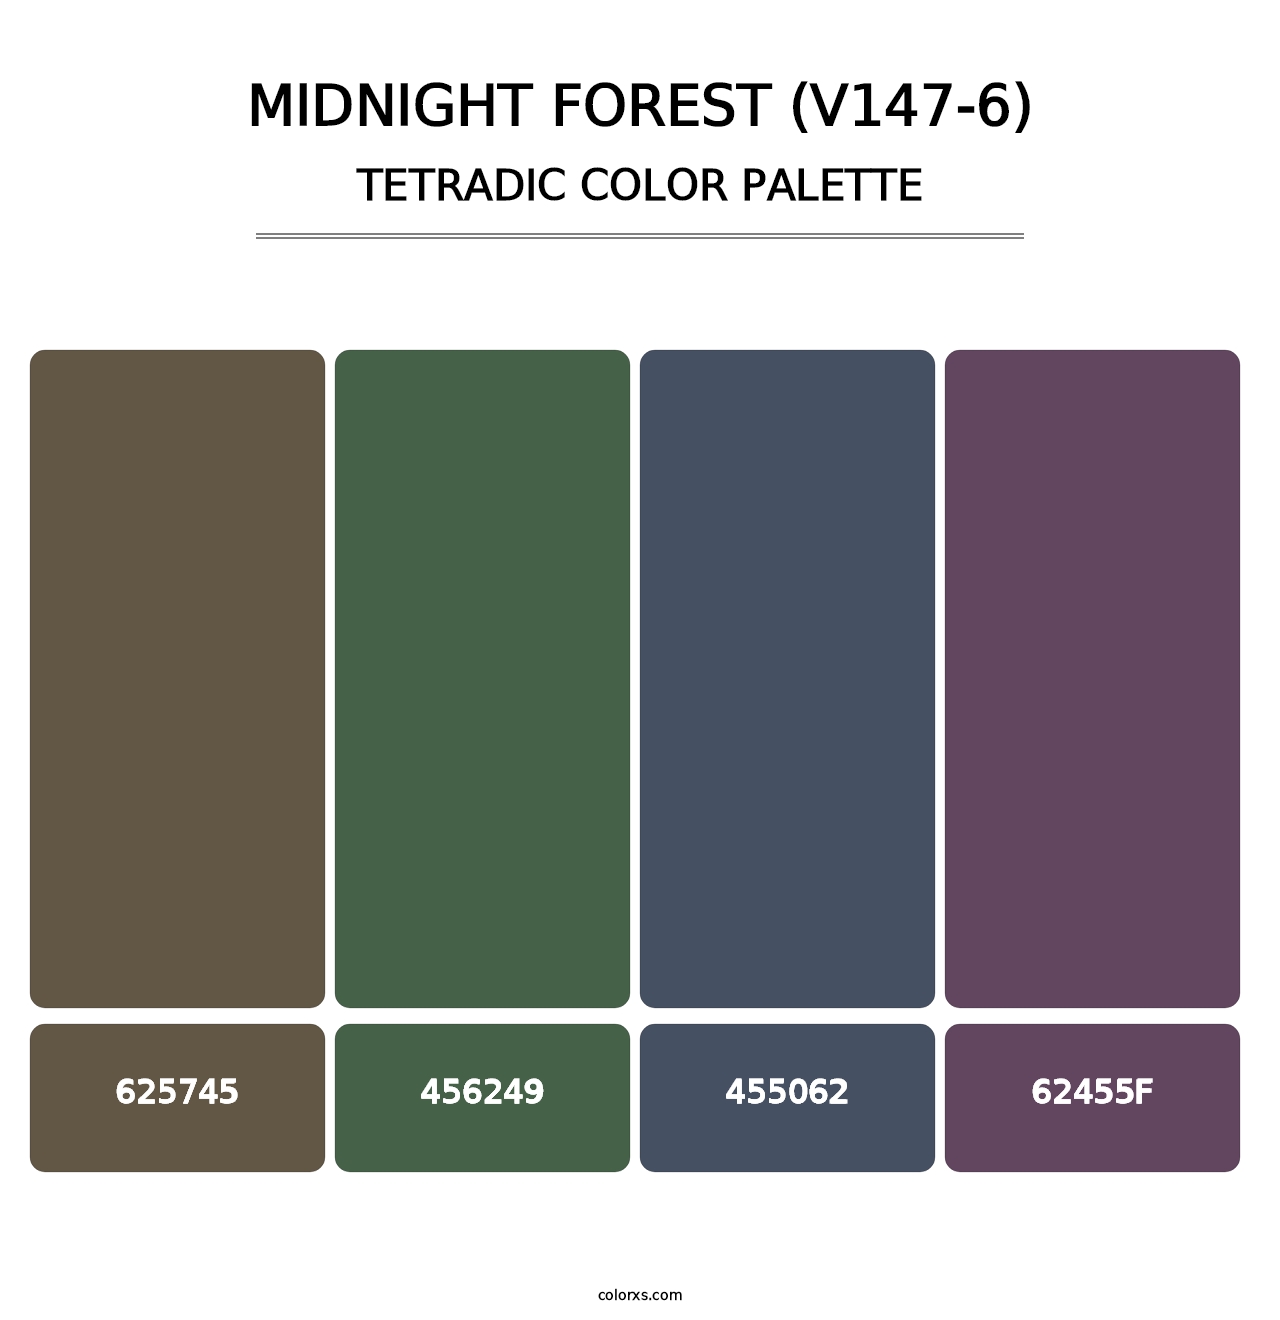 Midnight Forest (V147-6) - Tetradic Color Palette